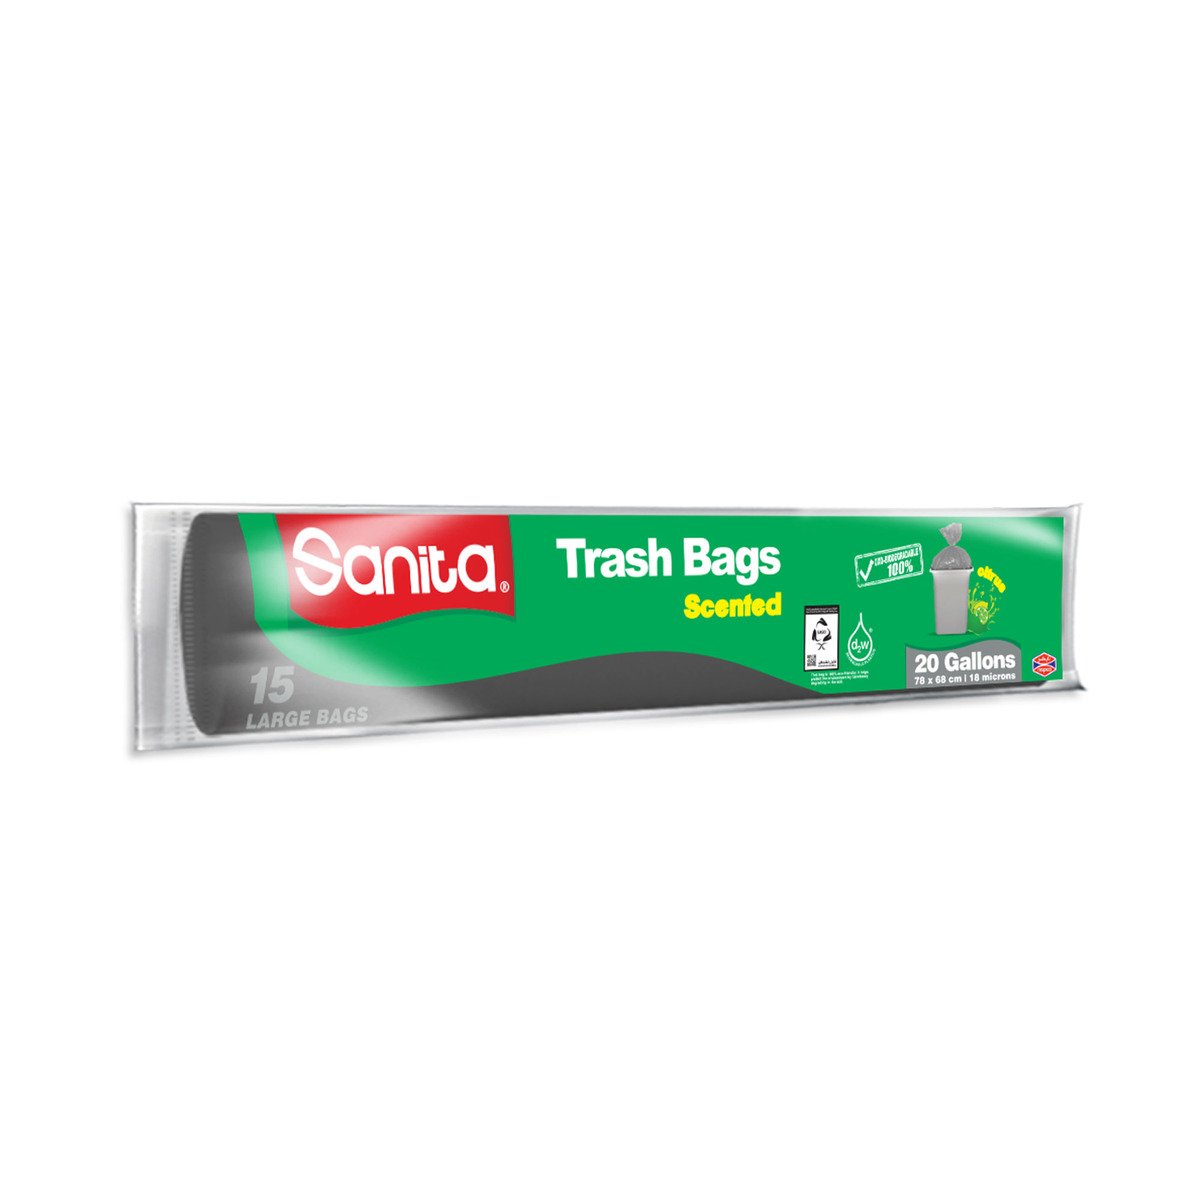 Sanita Trash Bags Scented Large  20 Gallons Size 78 x 68cm/ 18 Microns 15pcs